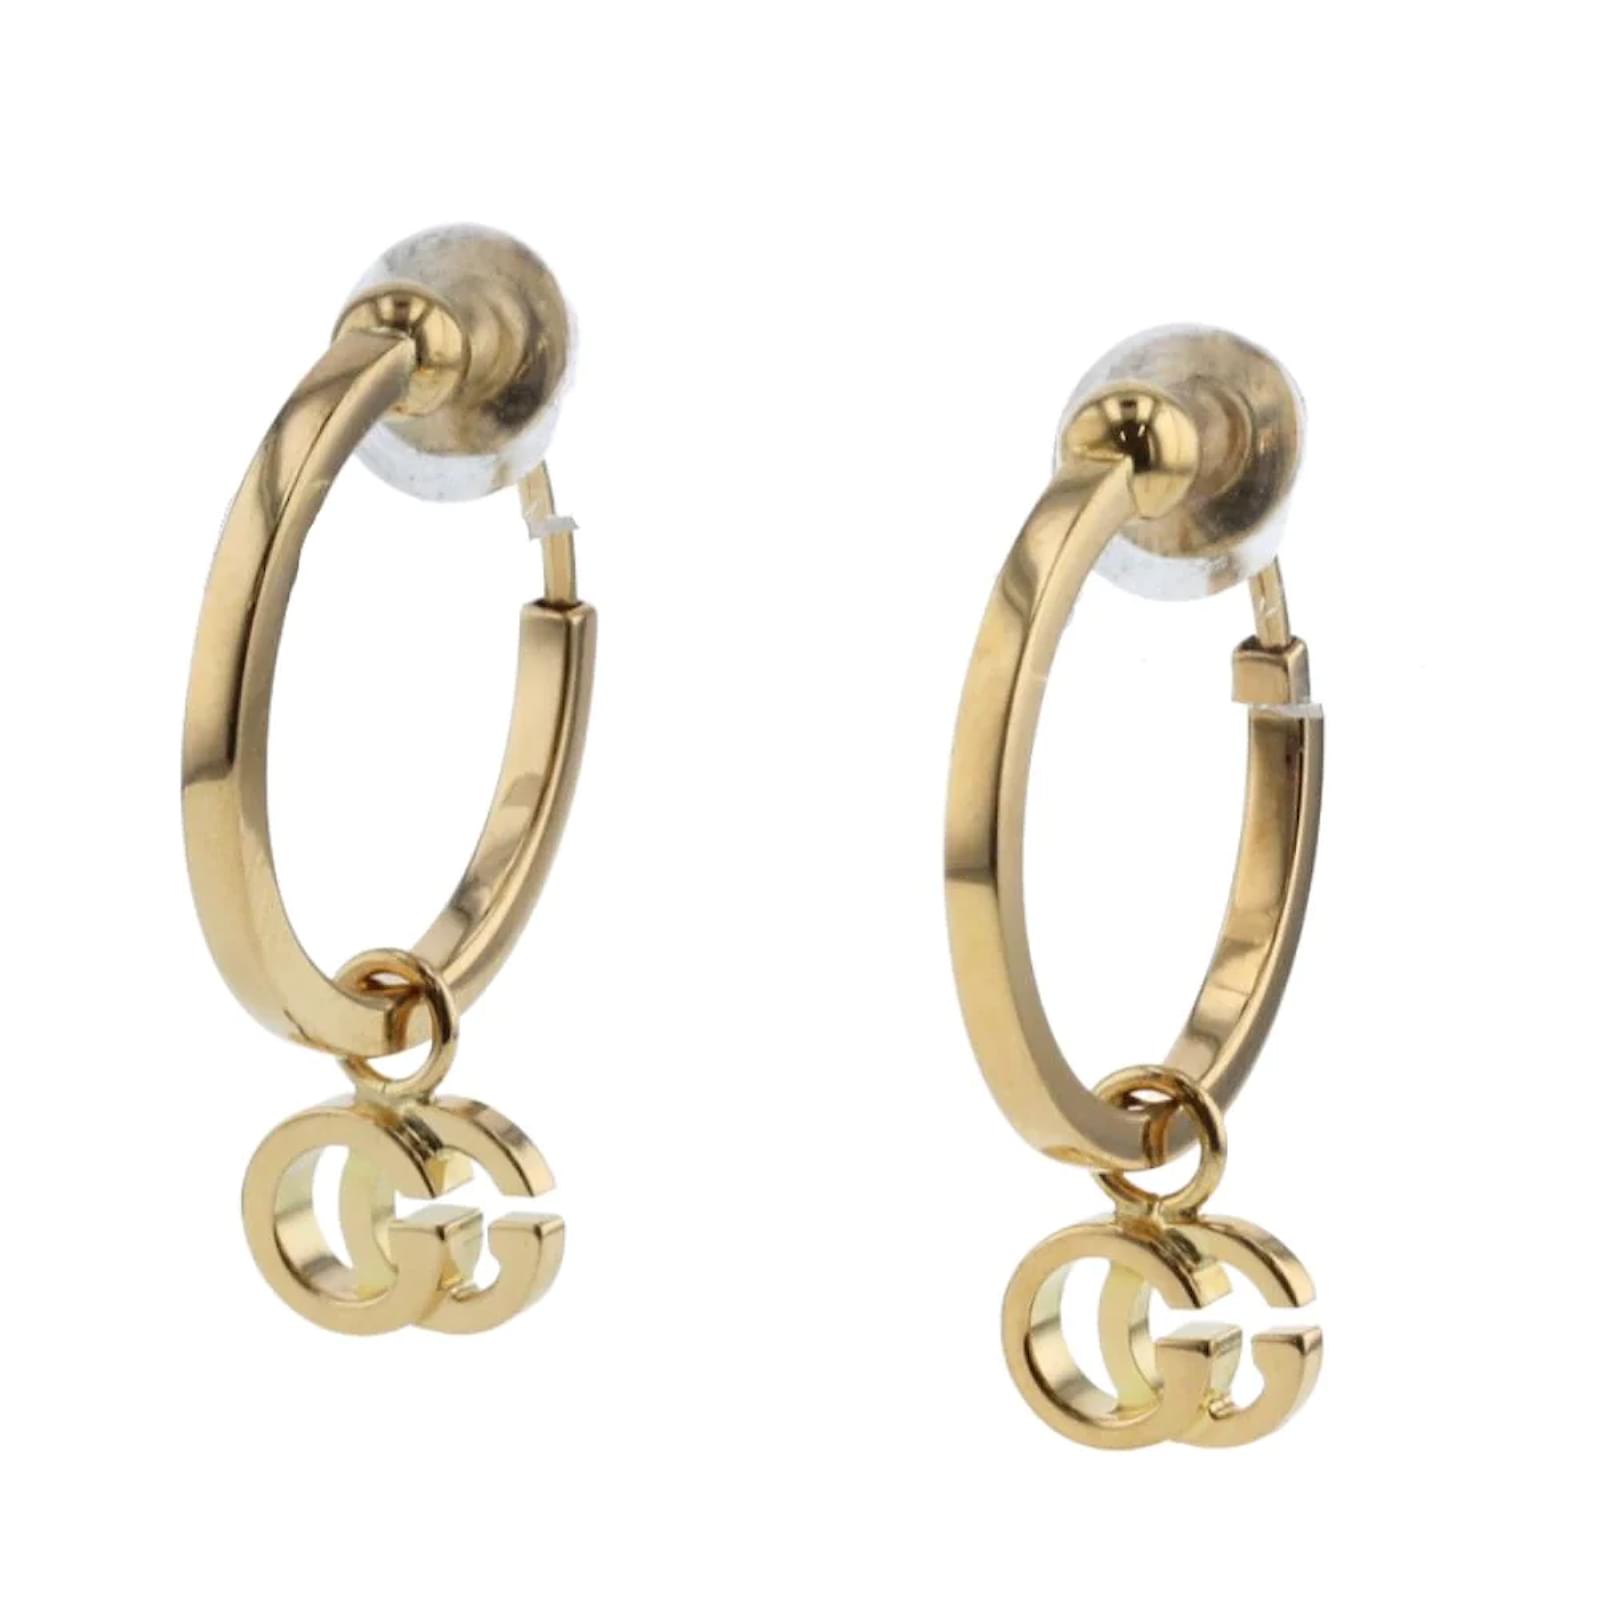 Share 65+ gucci hoop earrings latest - esthdonghoadian